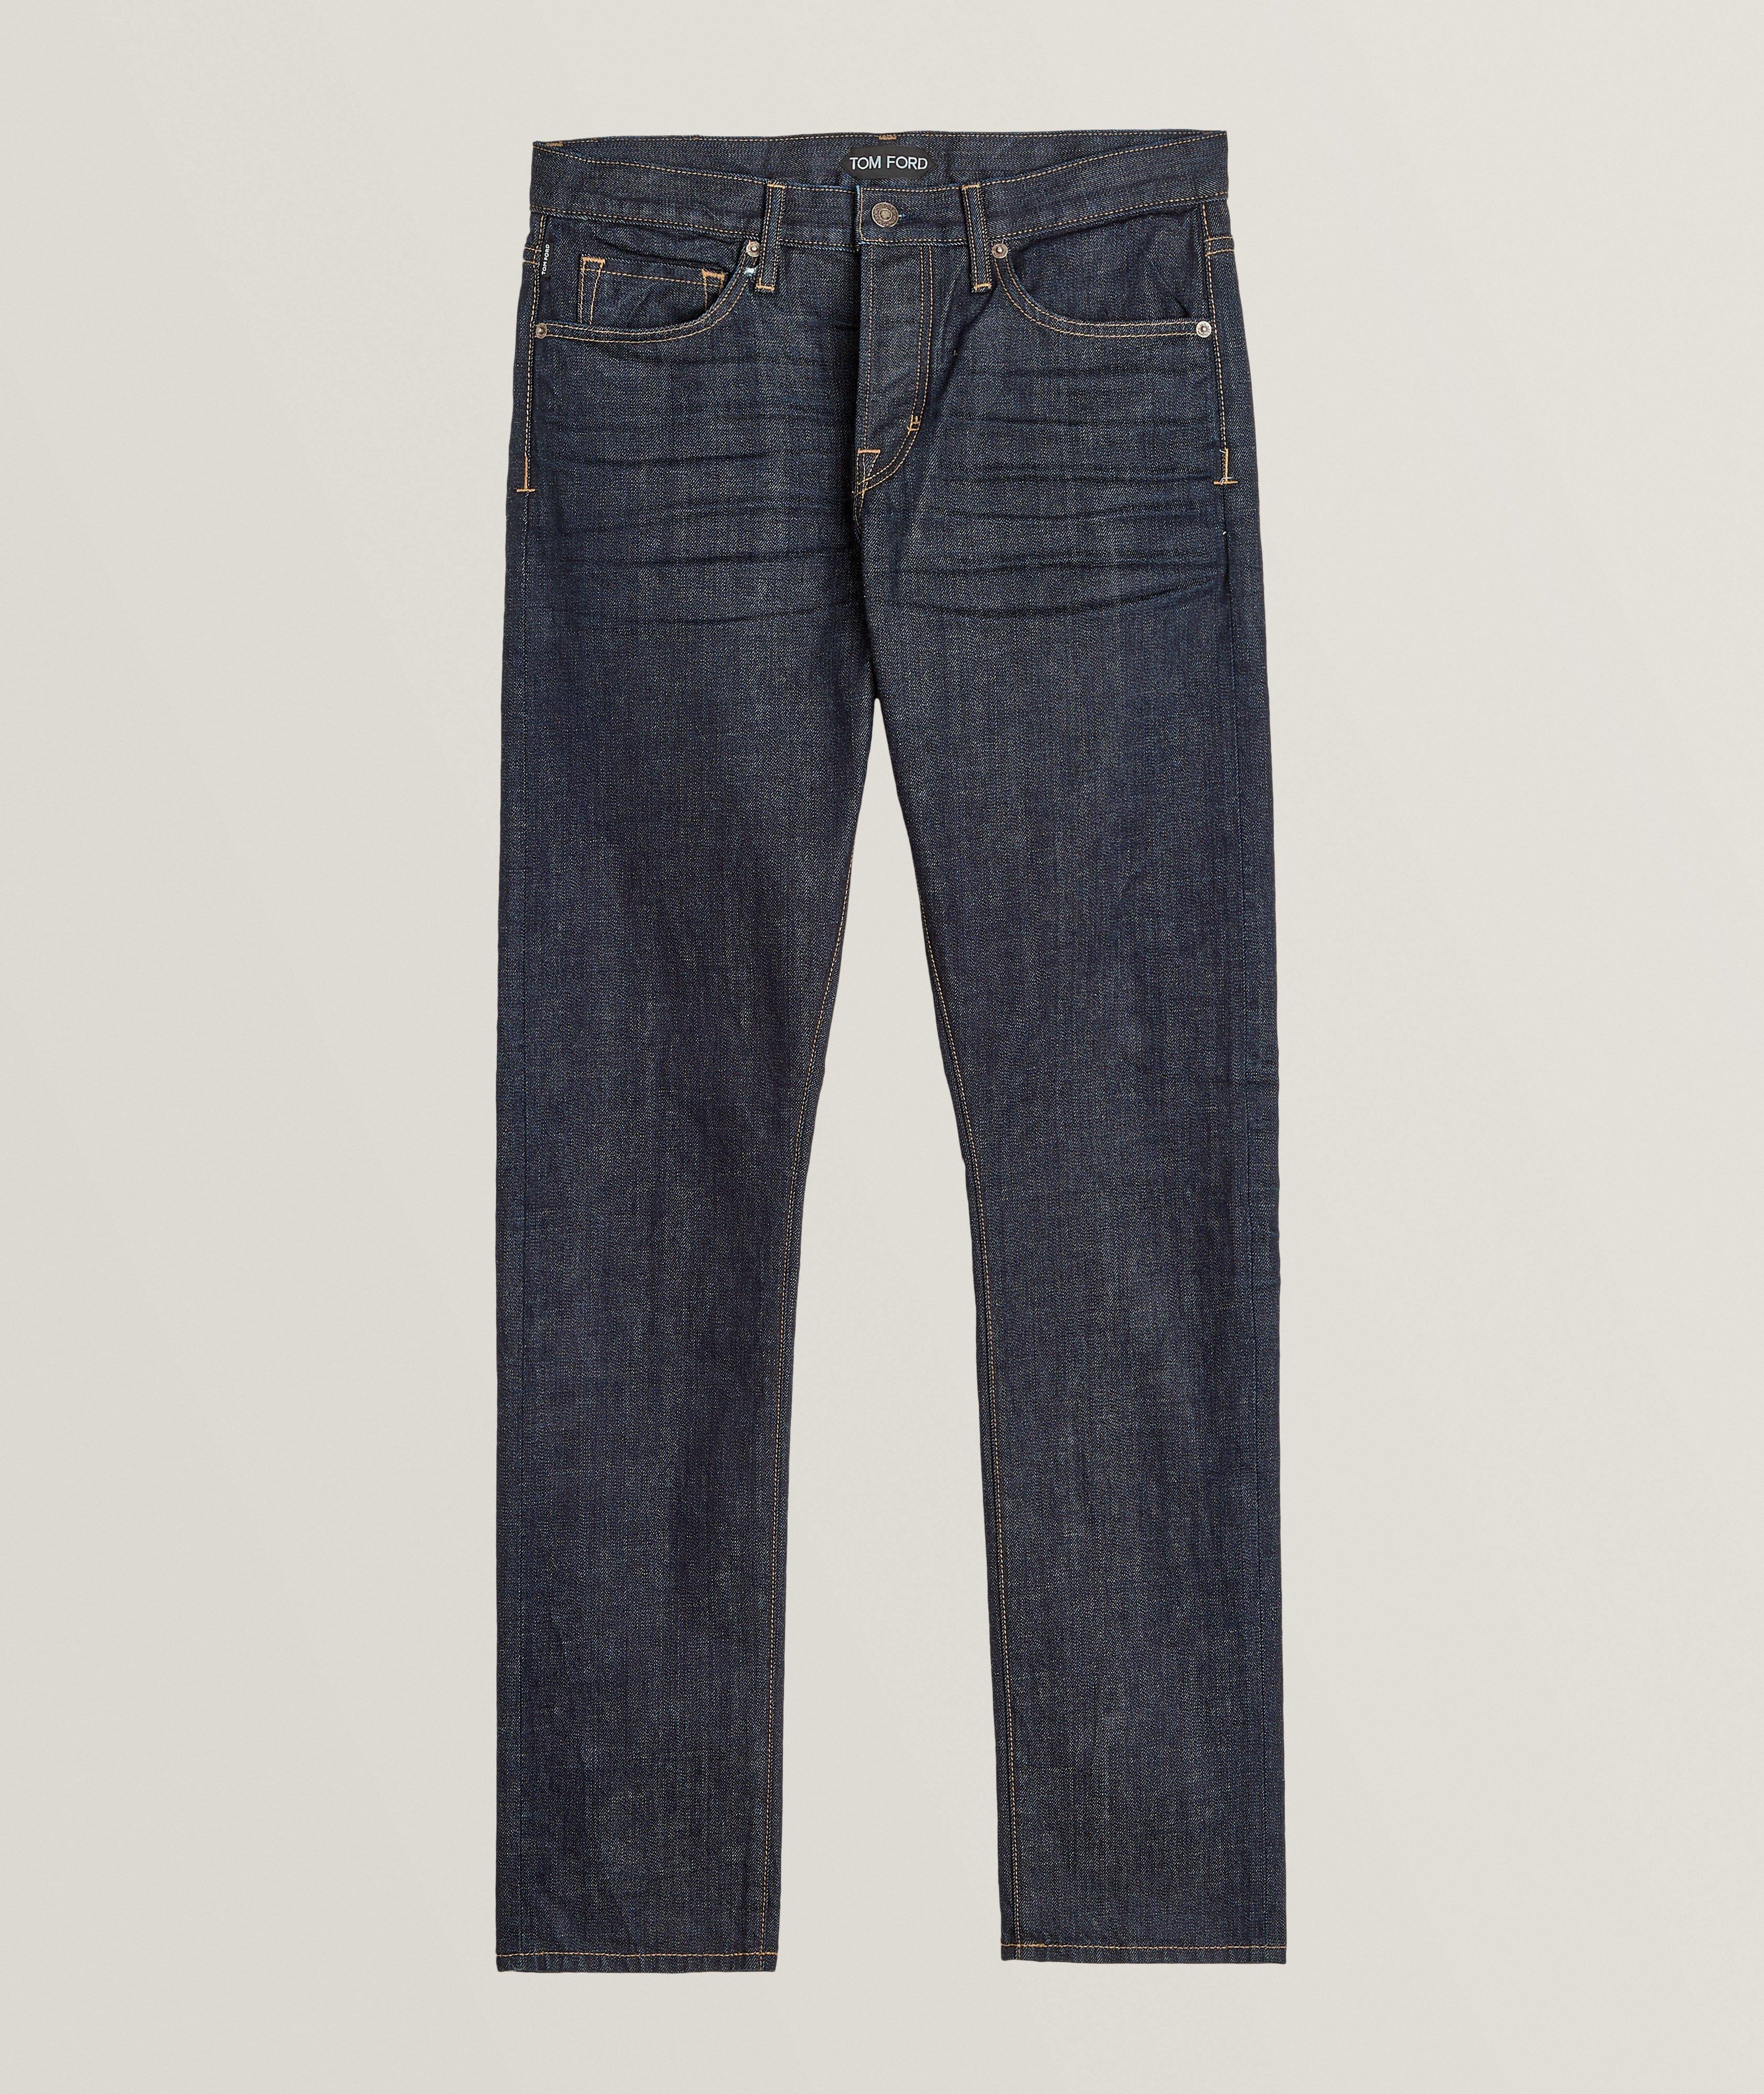 Selvedge Cotton Jeans image 0